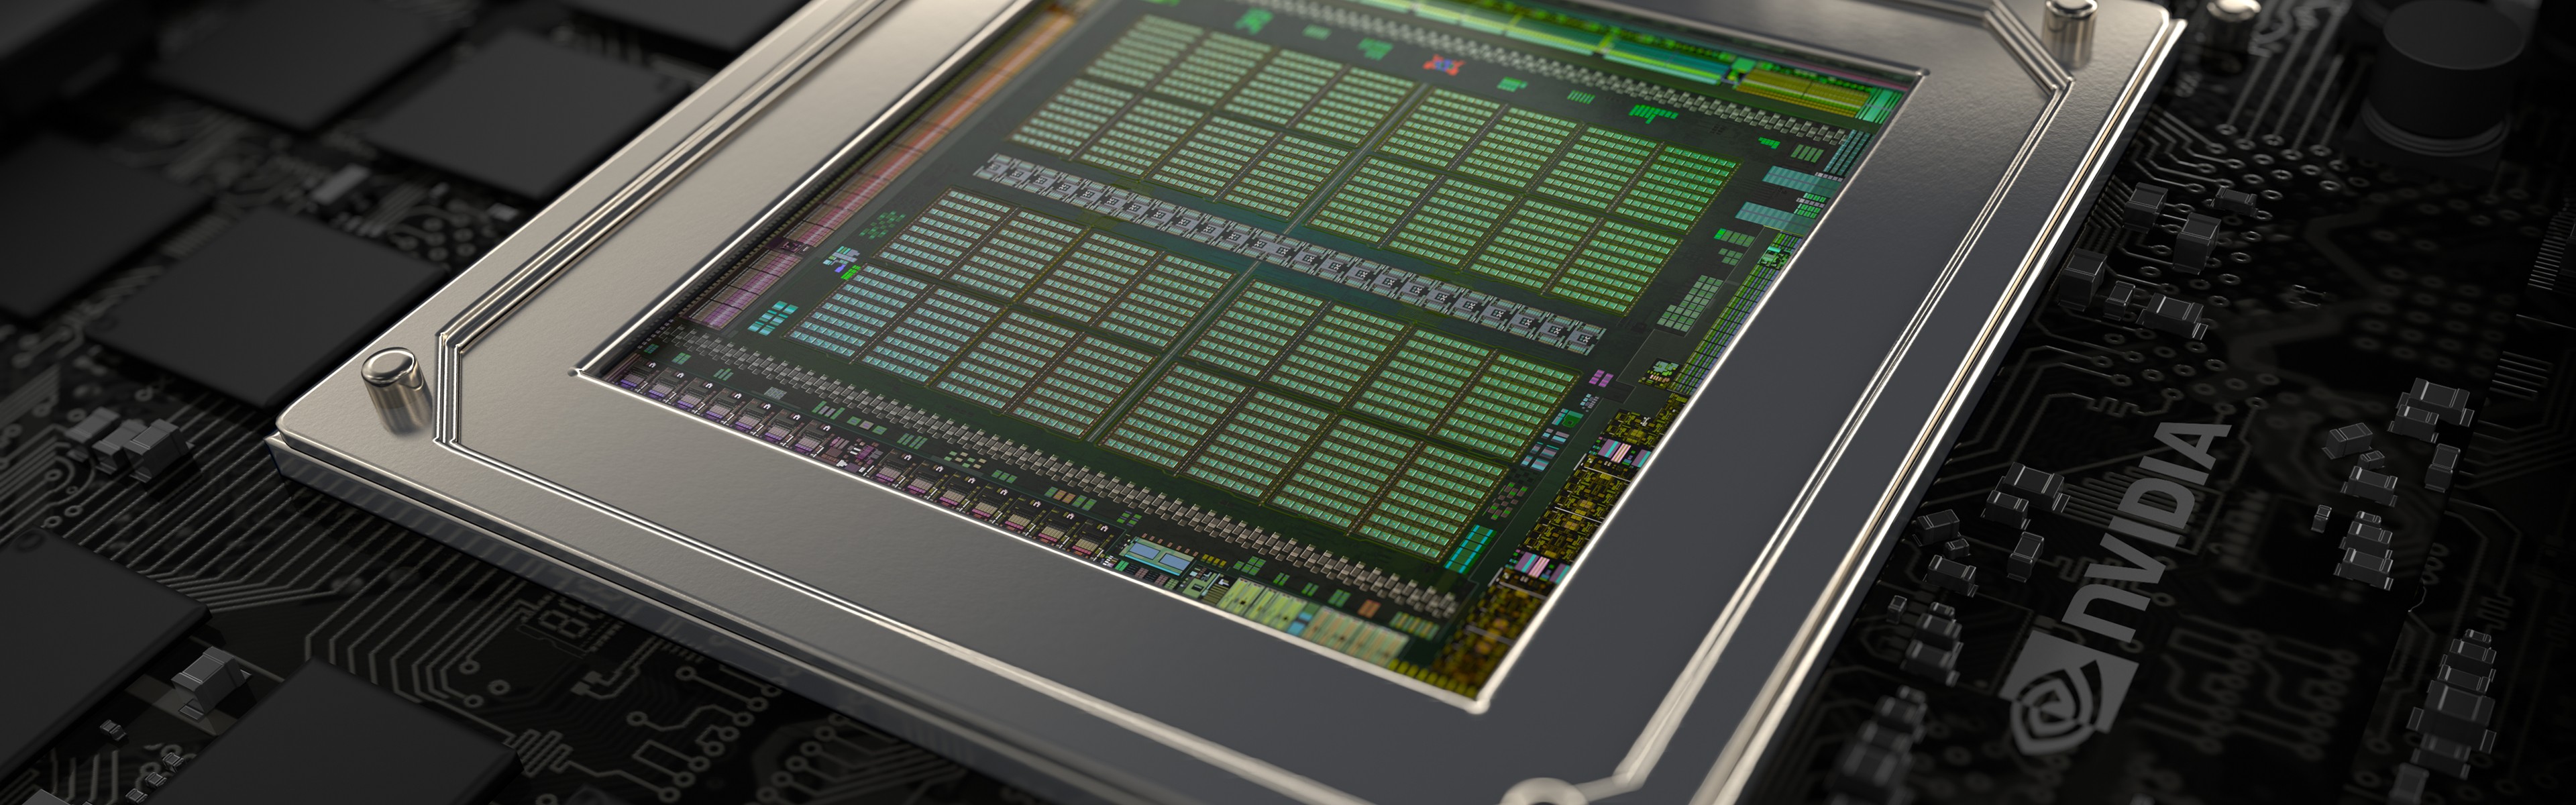 Nvidia GPUs Technology PC Gaming Multiple Display Graphics Card Dual Monitors 3840x1200